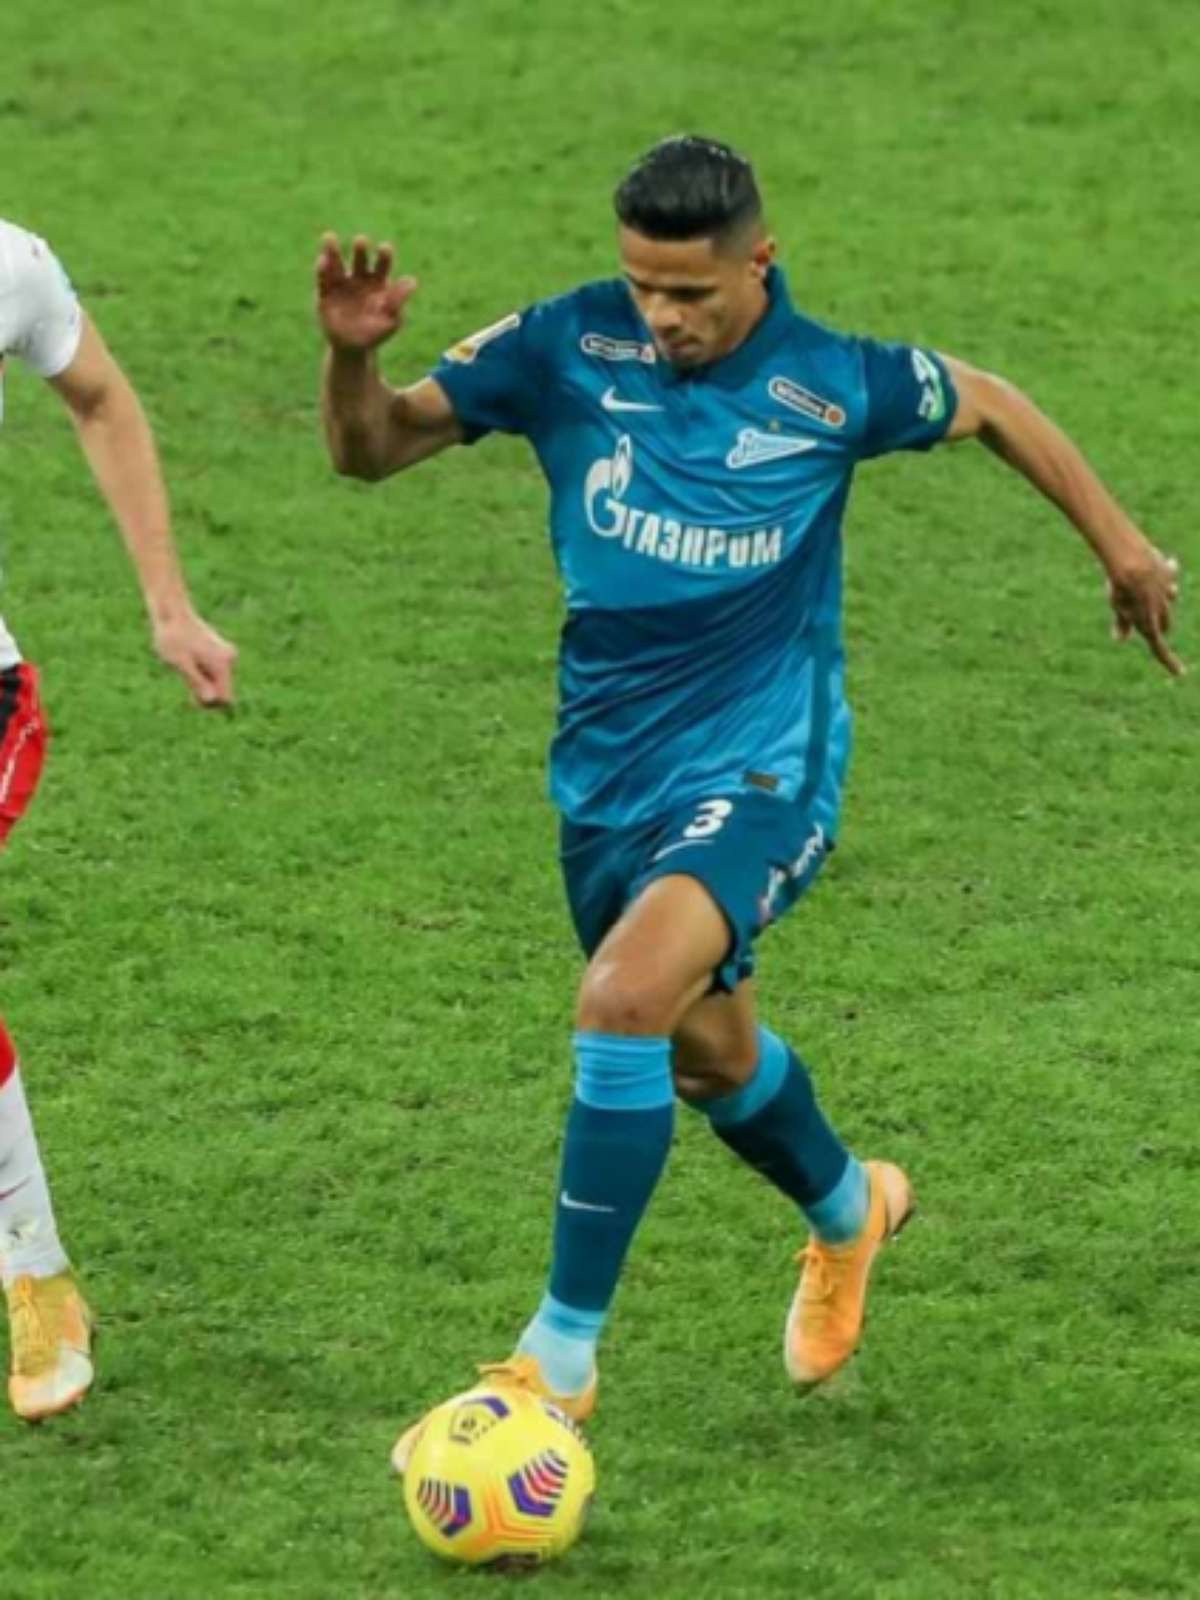 Douglas Santos comemora primeiro título com o Zenit: Oficialmente